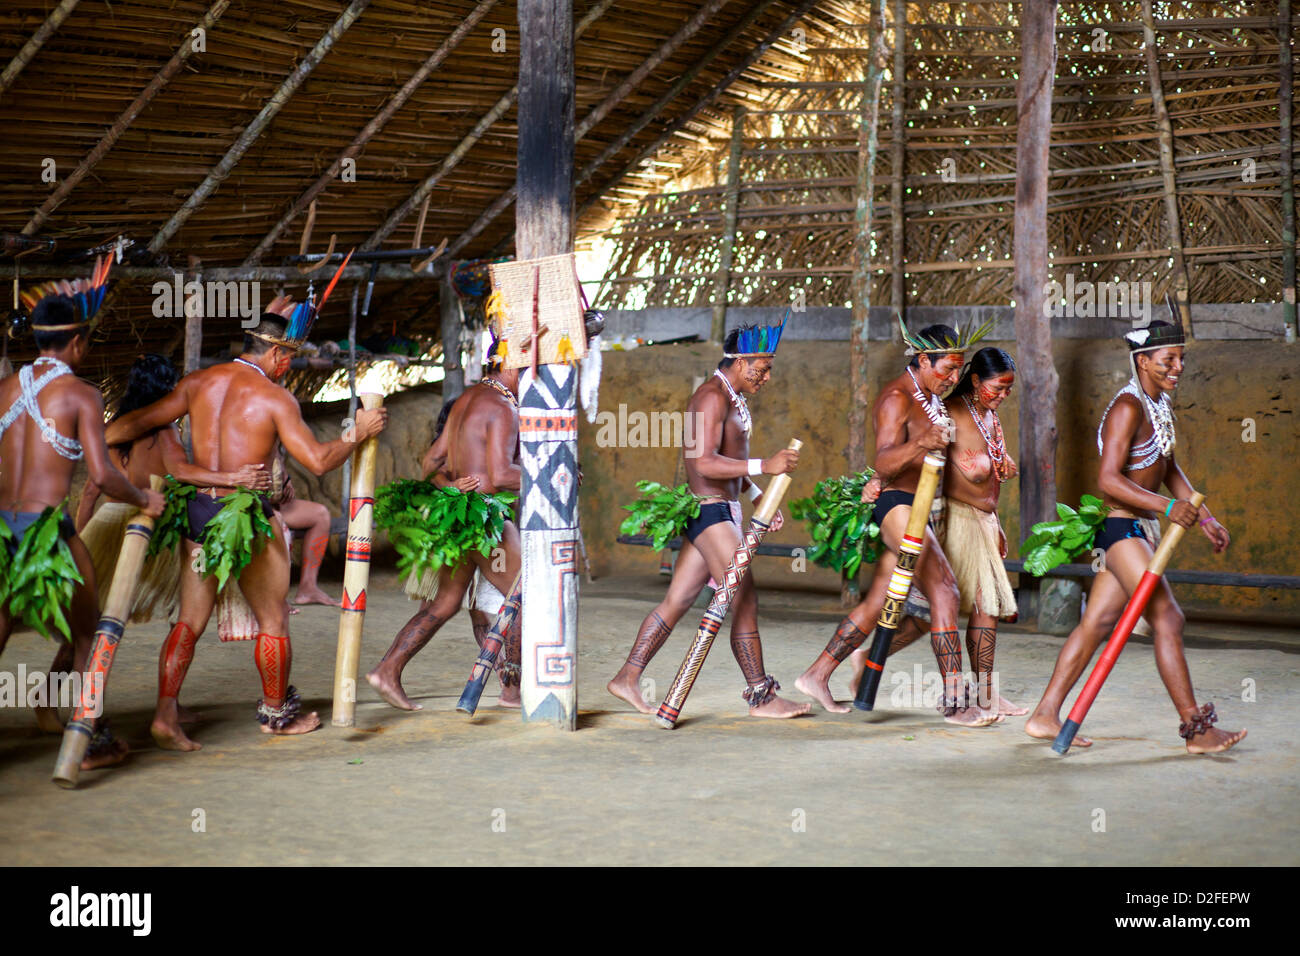 Amazon tribe dance fotografías e imágenes de alta resolución - Alamy